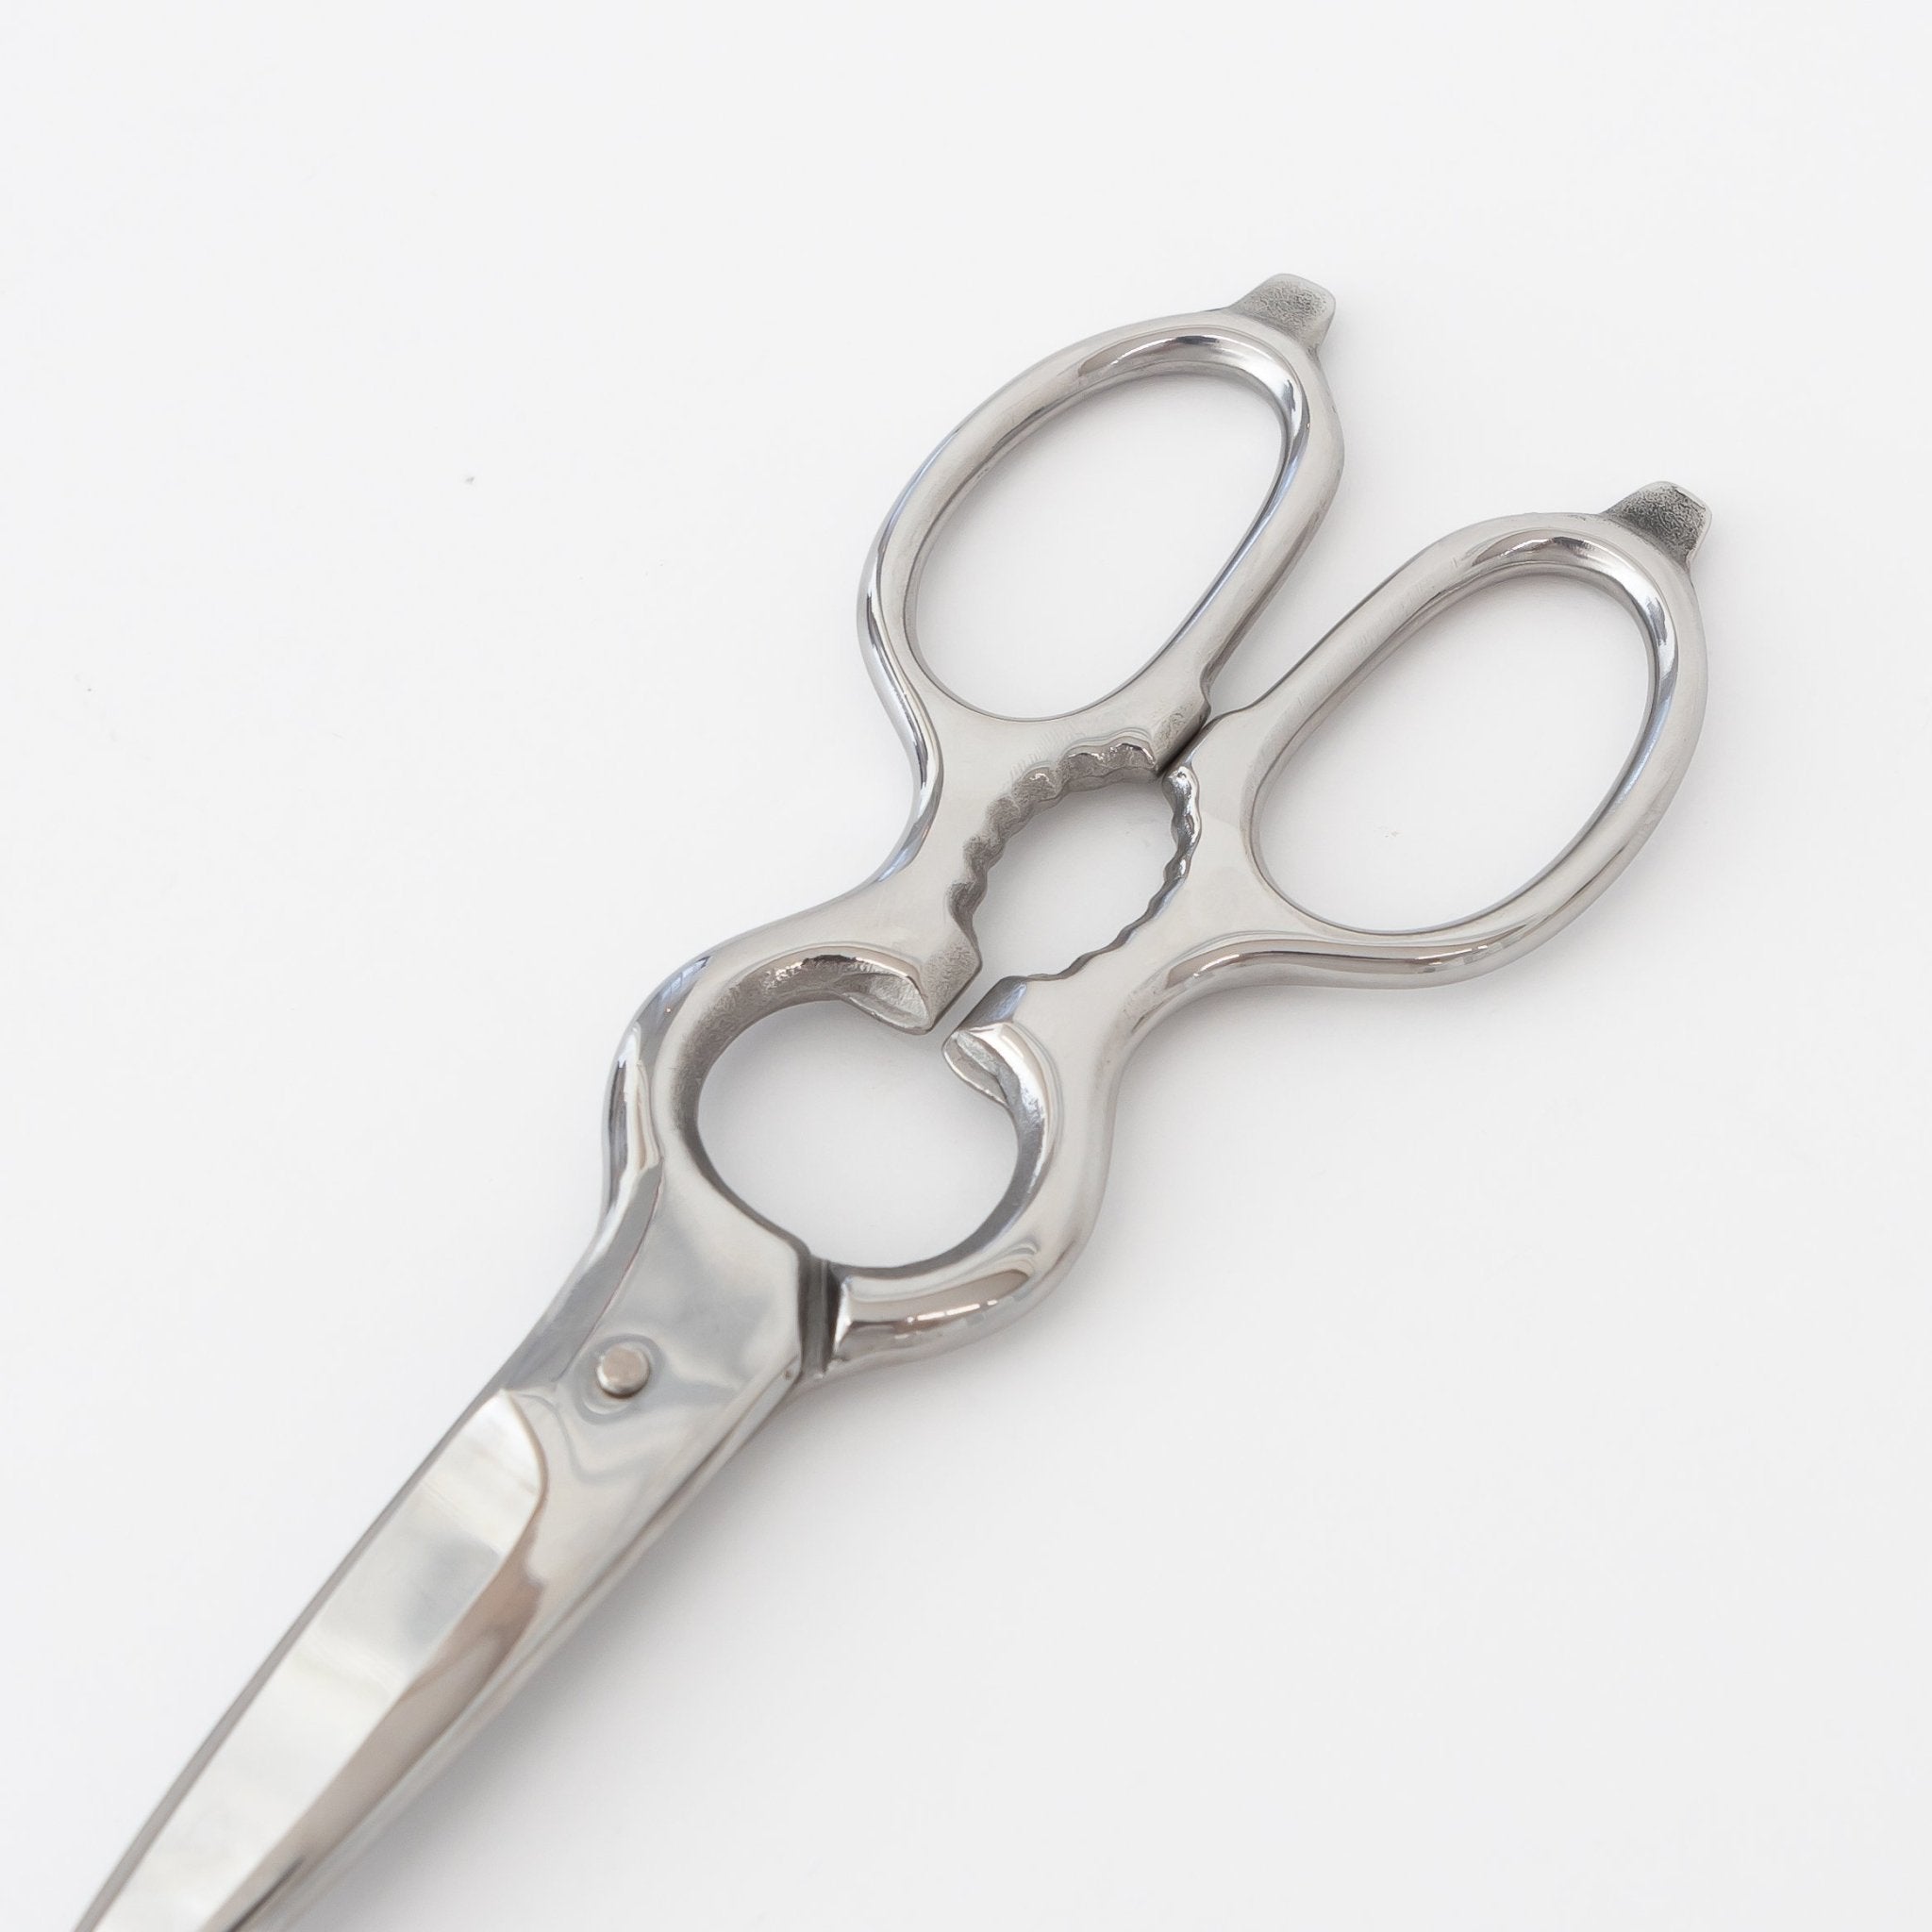 File:Kitchen-Scissors.jpg - Wikipedia